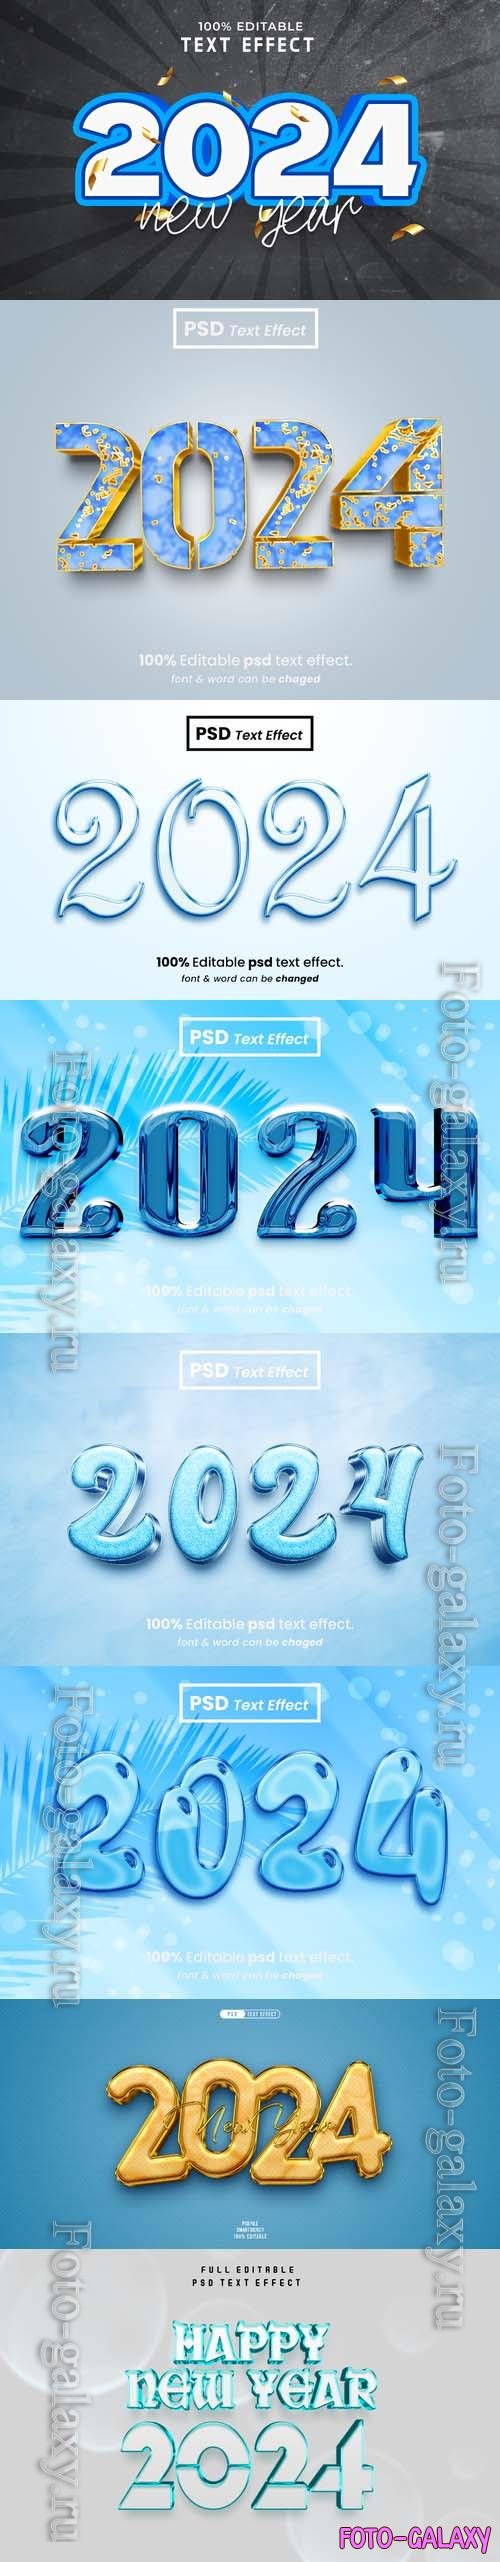 PSD new year 2024 3d editable text effect vol 1